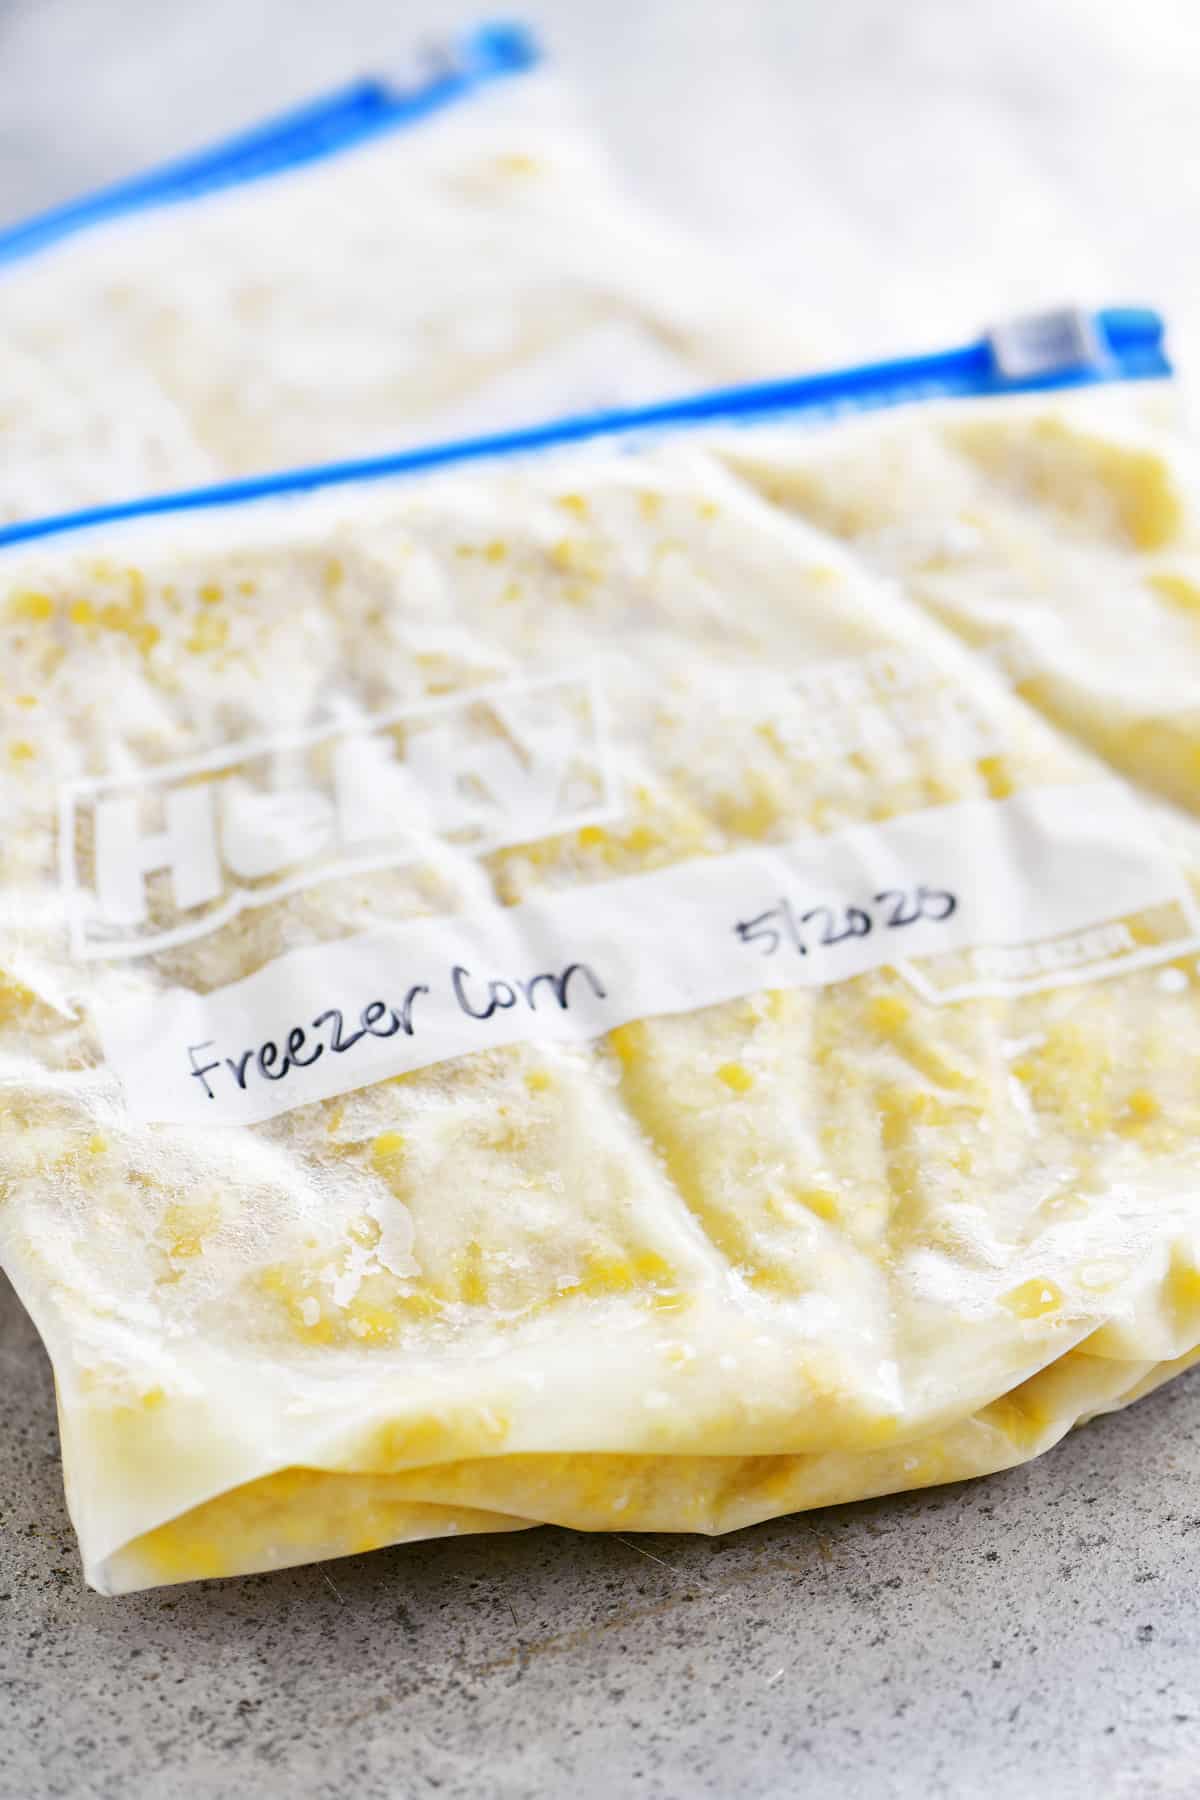 labeled freezer bag of corn